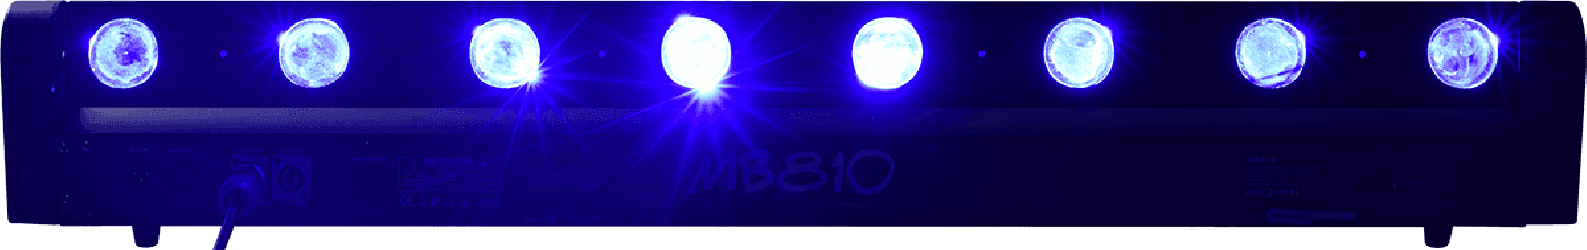 Barre motorisée Algam Lighting MB810